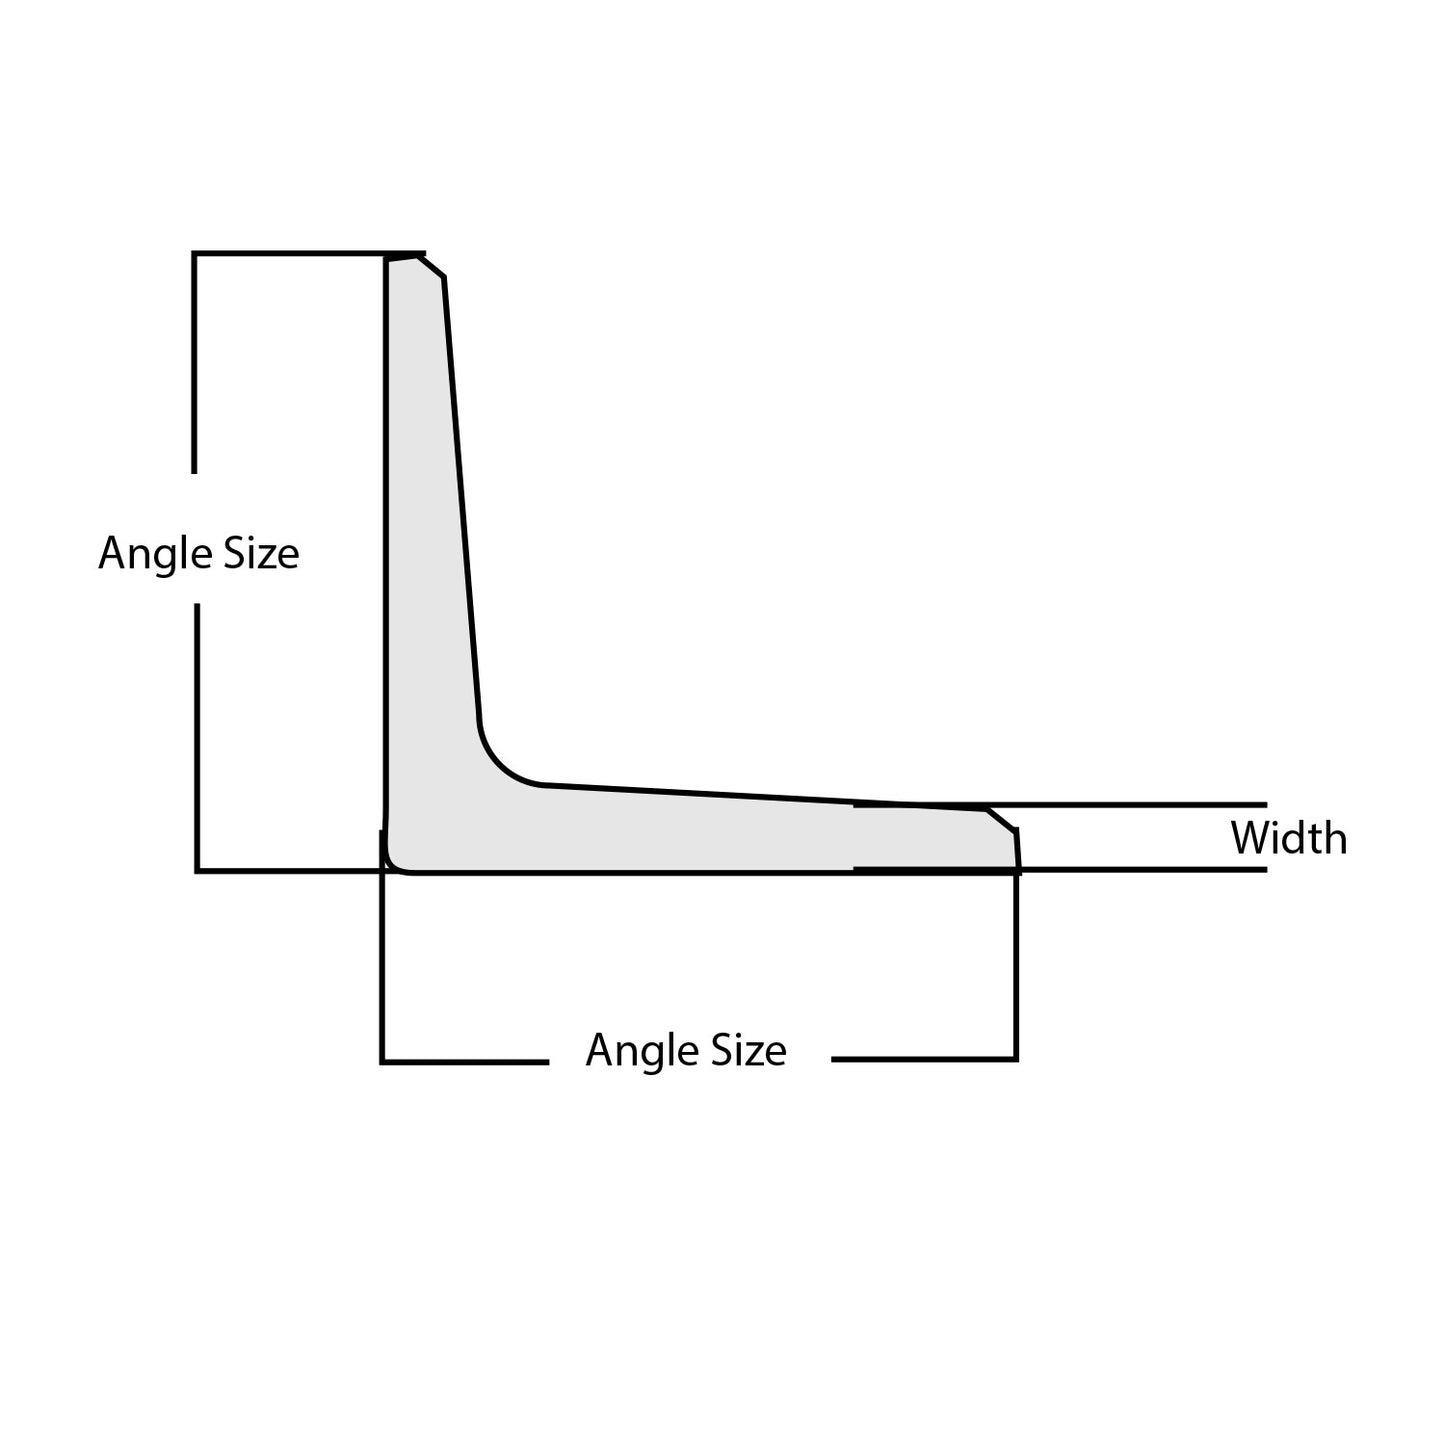 4" x 3" Aluminum Angle - Thickness 1/2